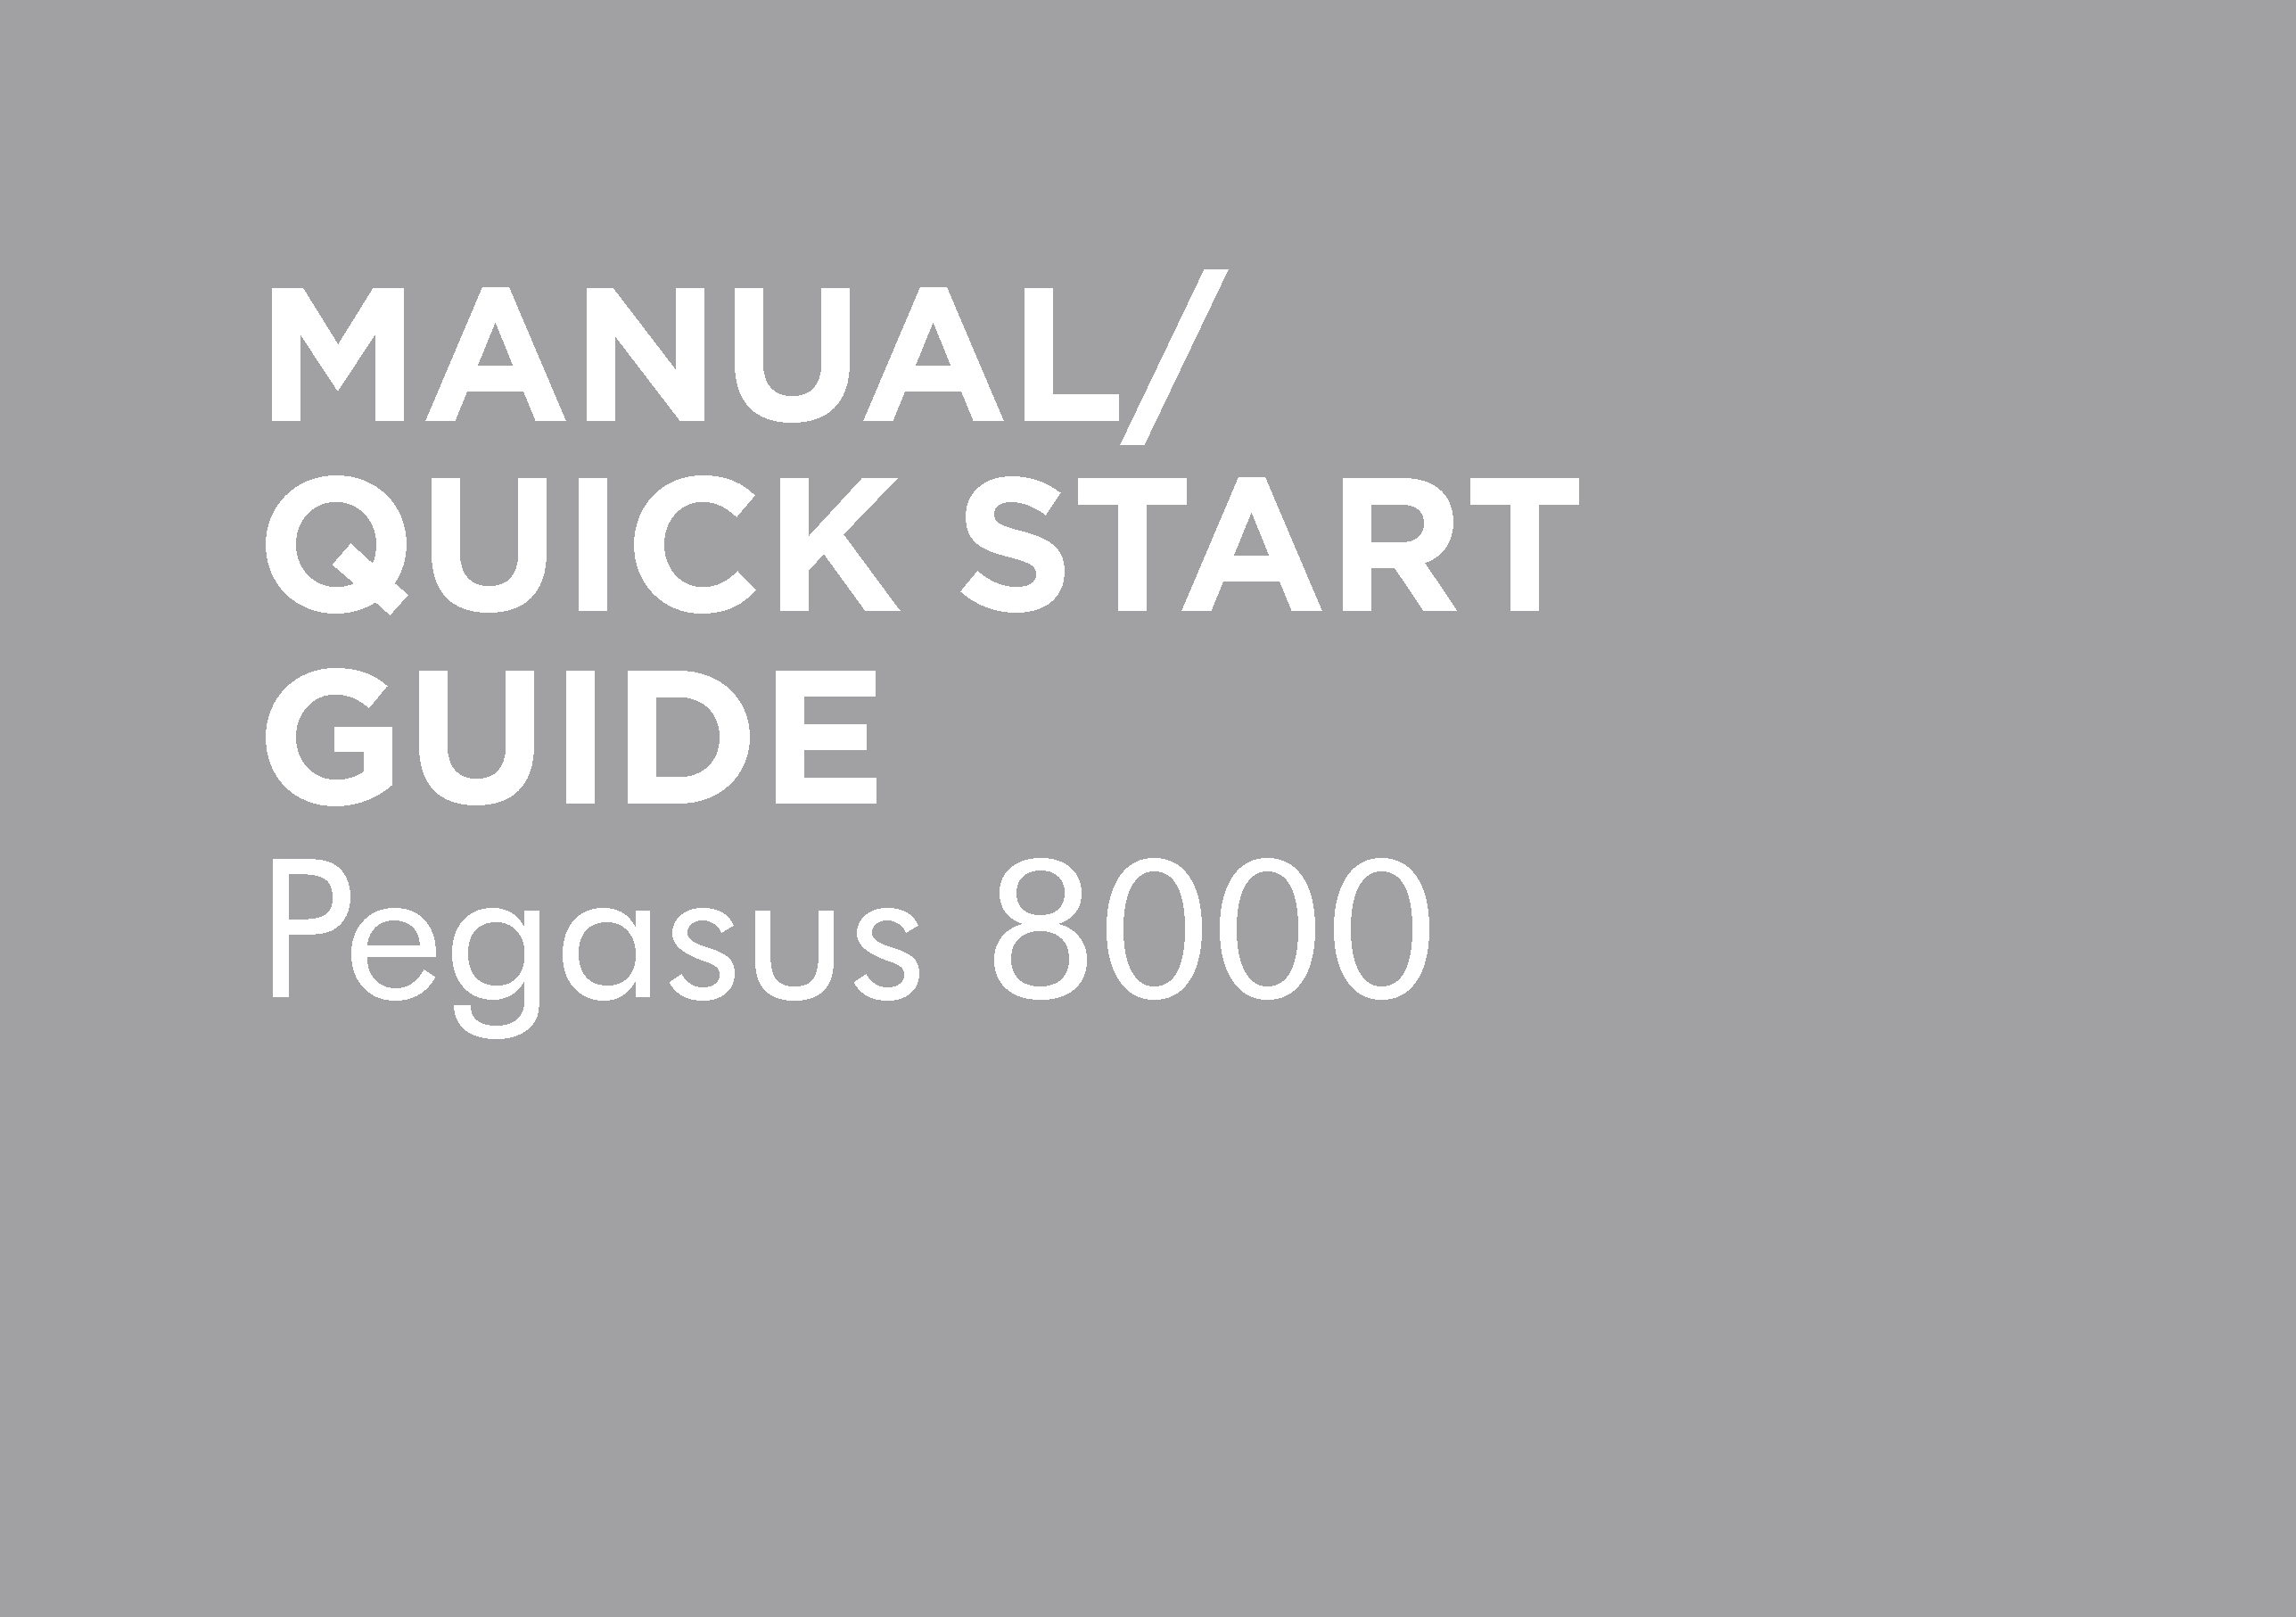 QUICK START GUIDE PEGASUS 8000 MANUAL